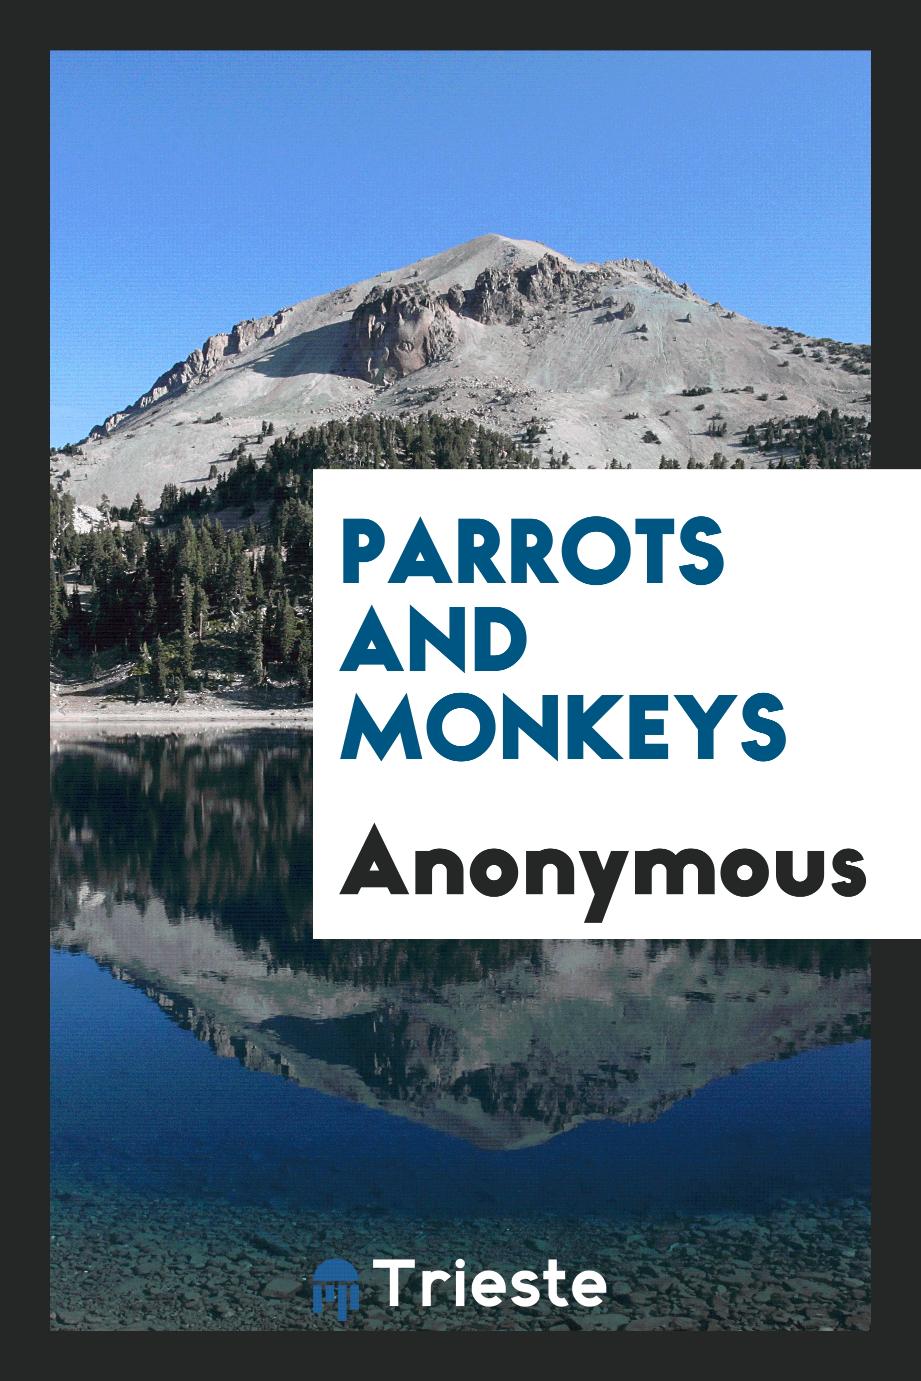 Parrots and Monkeys